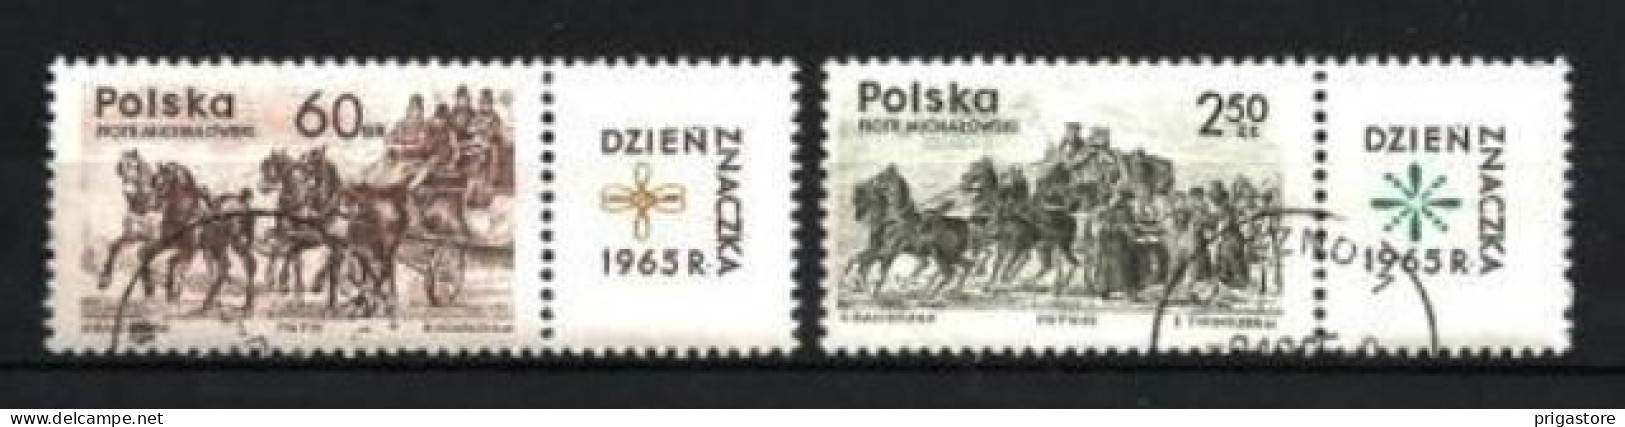 Chevaux Pologne 1965 (41) Yvert N° 1480 + 1481 Oblitéré Used - Horses